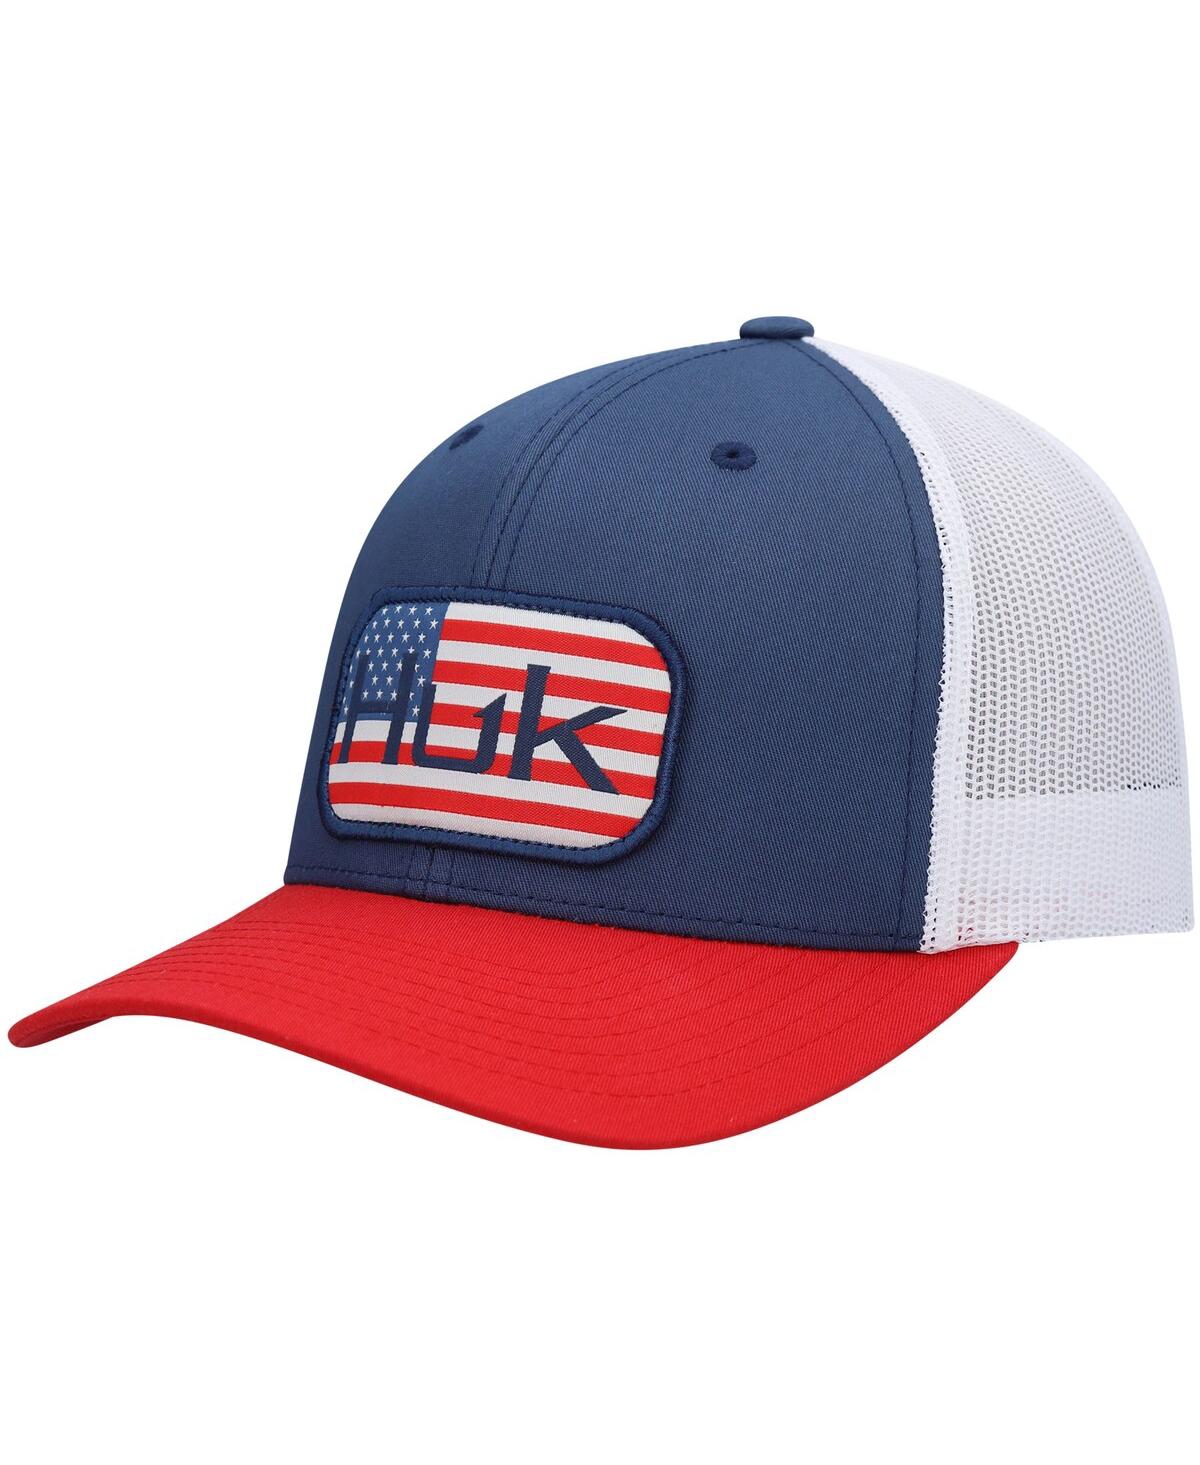 Men's Huk Blue Americana Color Block Trucker Snapback Hat - Blue